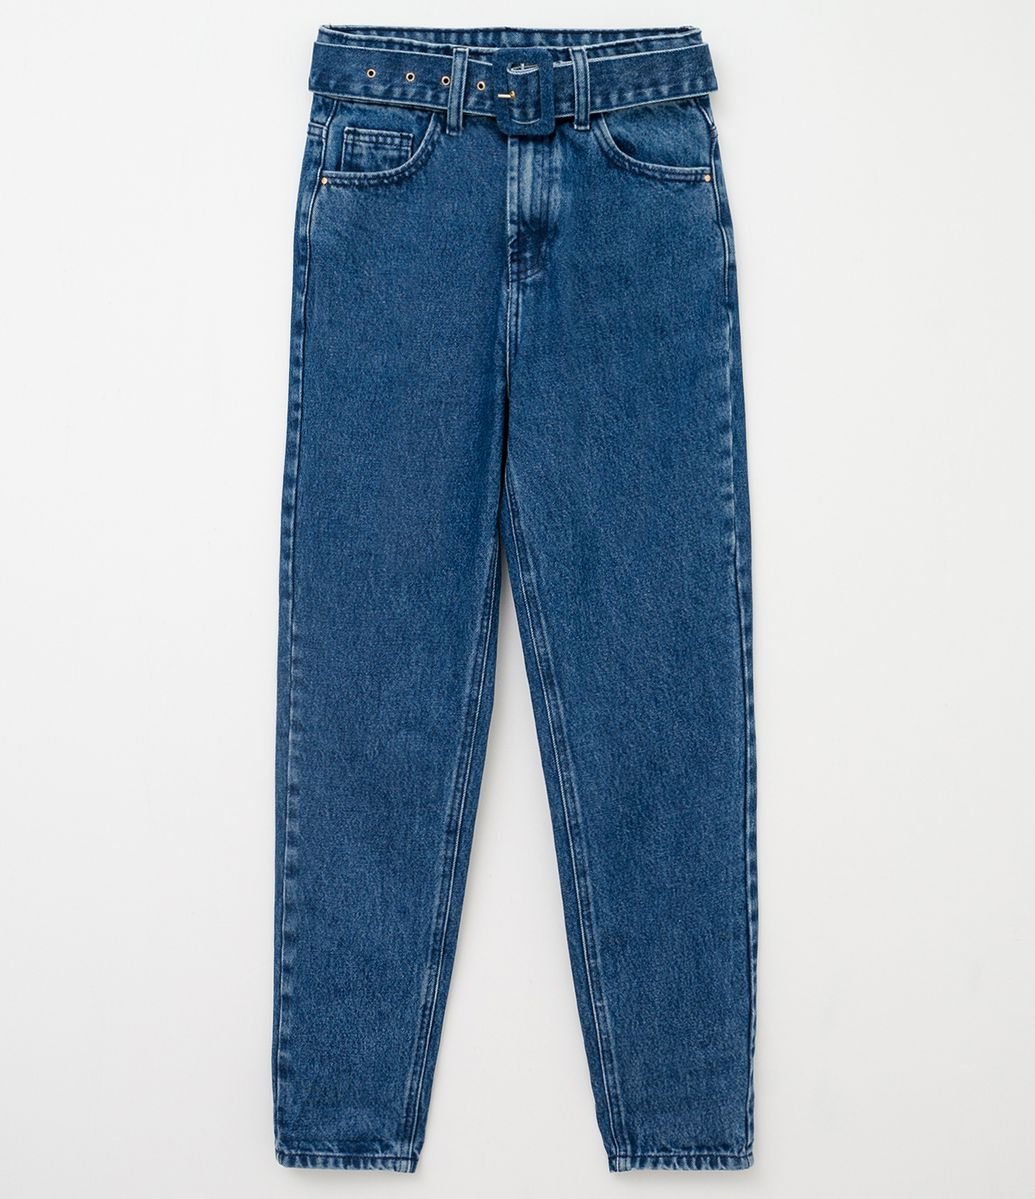 lojas renner calças jeans femininas